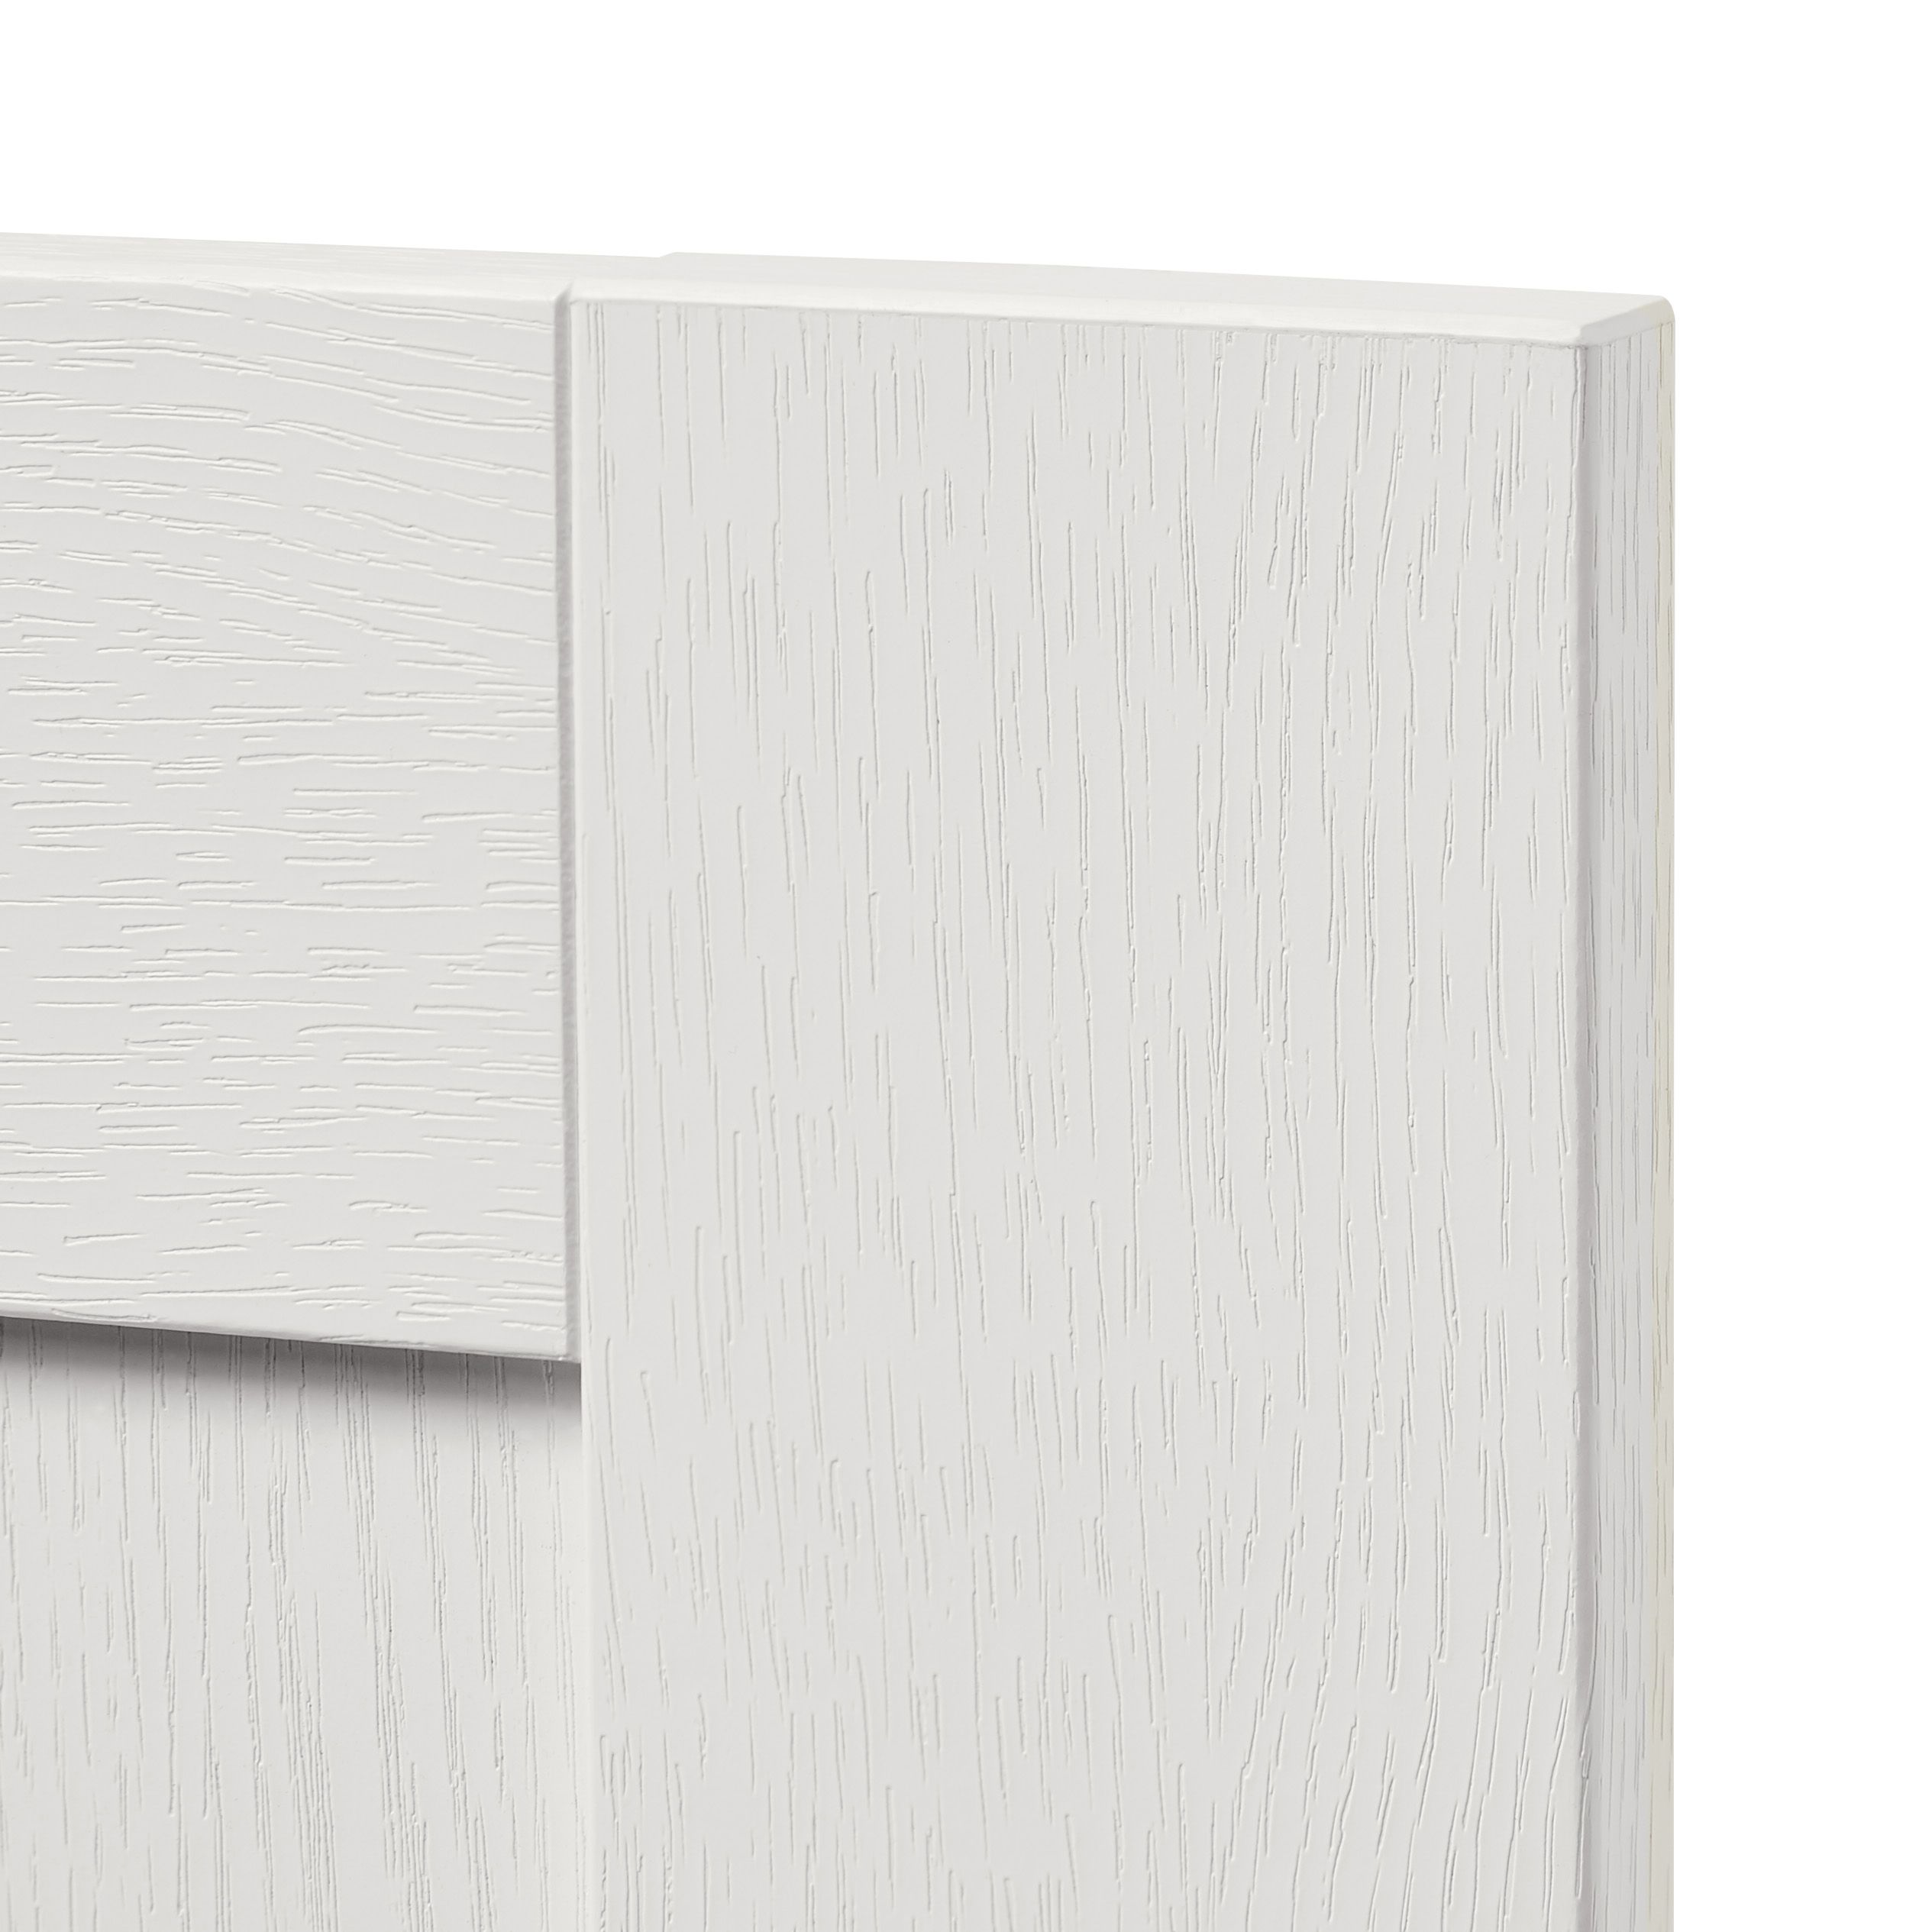 GoodHome Alpinia Matt ivory painted wood effect shaker Appliance Cabinet door (W)600mm (H)543mm (T)18mm